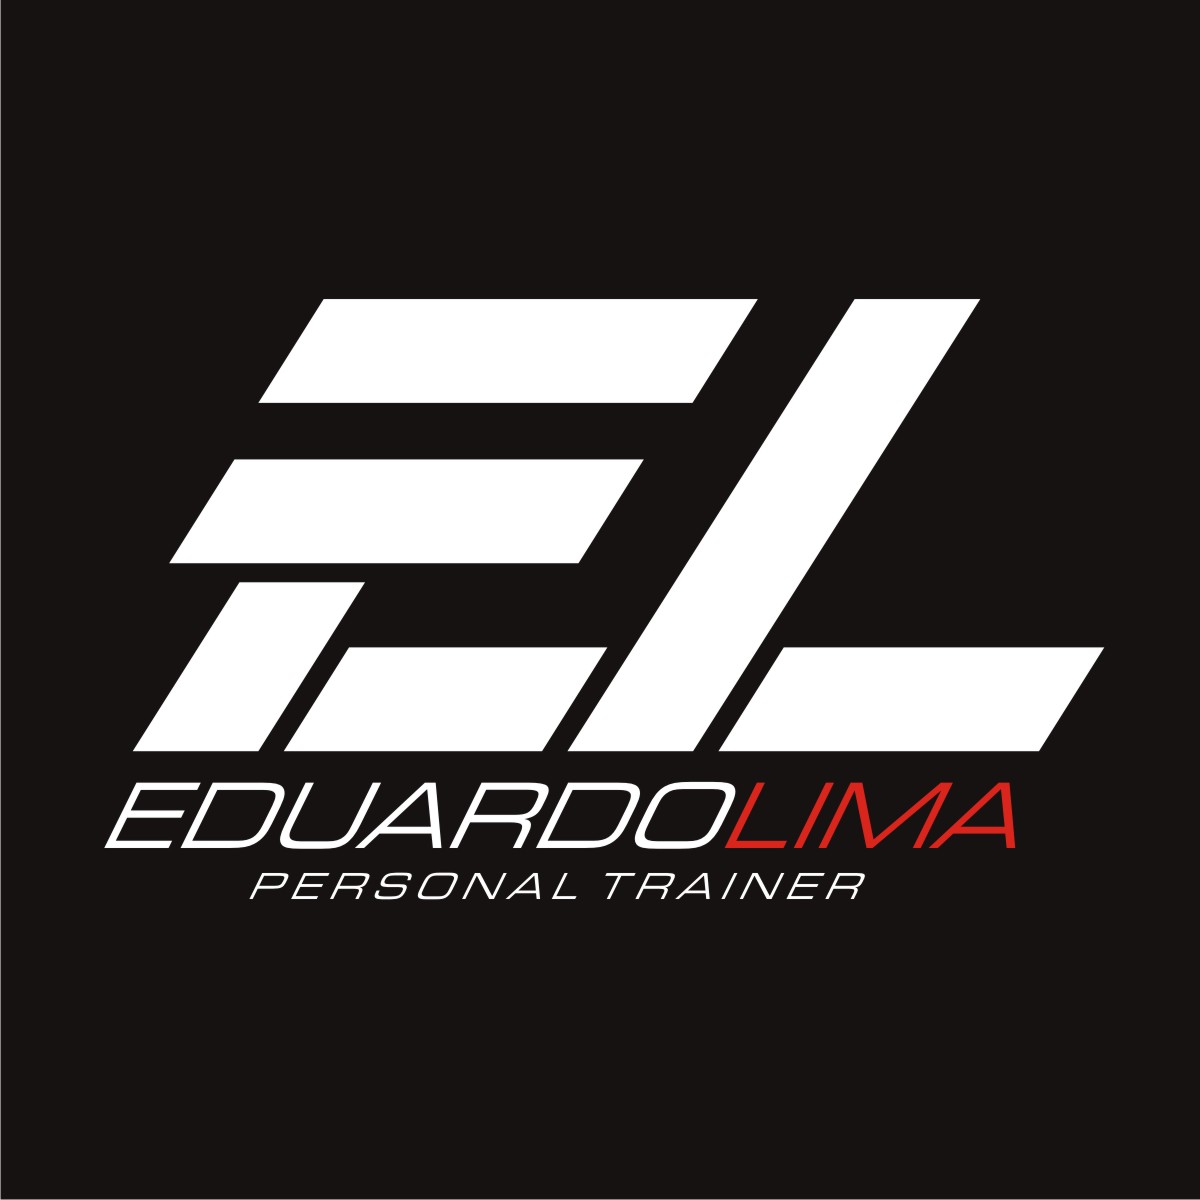 EDUARDO LIMA - PERSONAL TRANINER - Personal Trainer - Caraguatatuba, SP